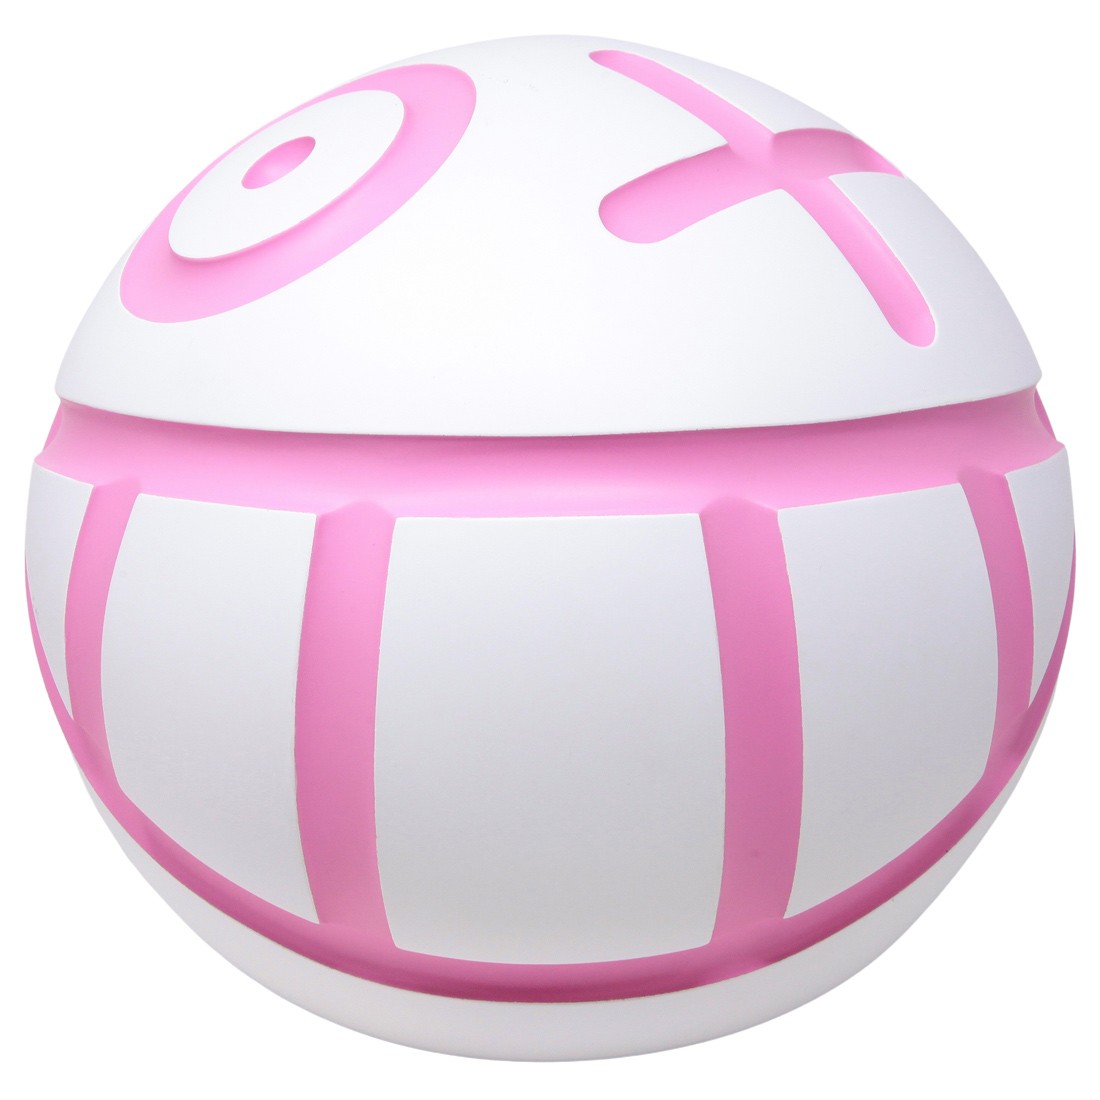 Medicom VCD Andre Saraiva Mr. A Ball White W Size Figure (white / pink)